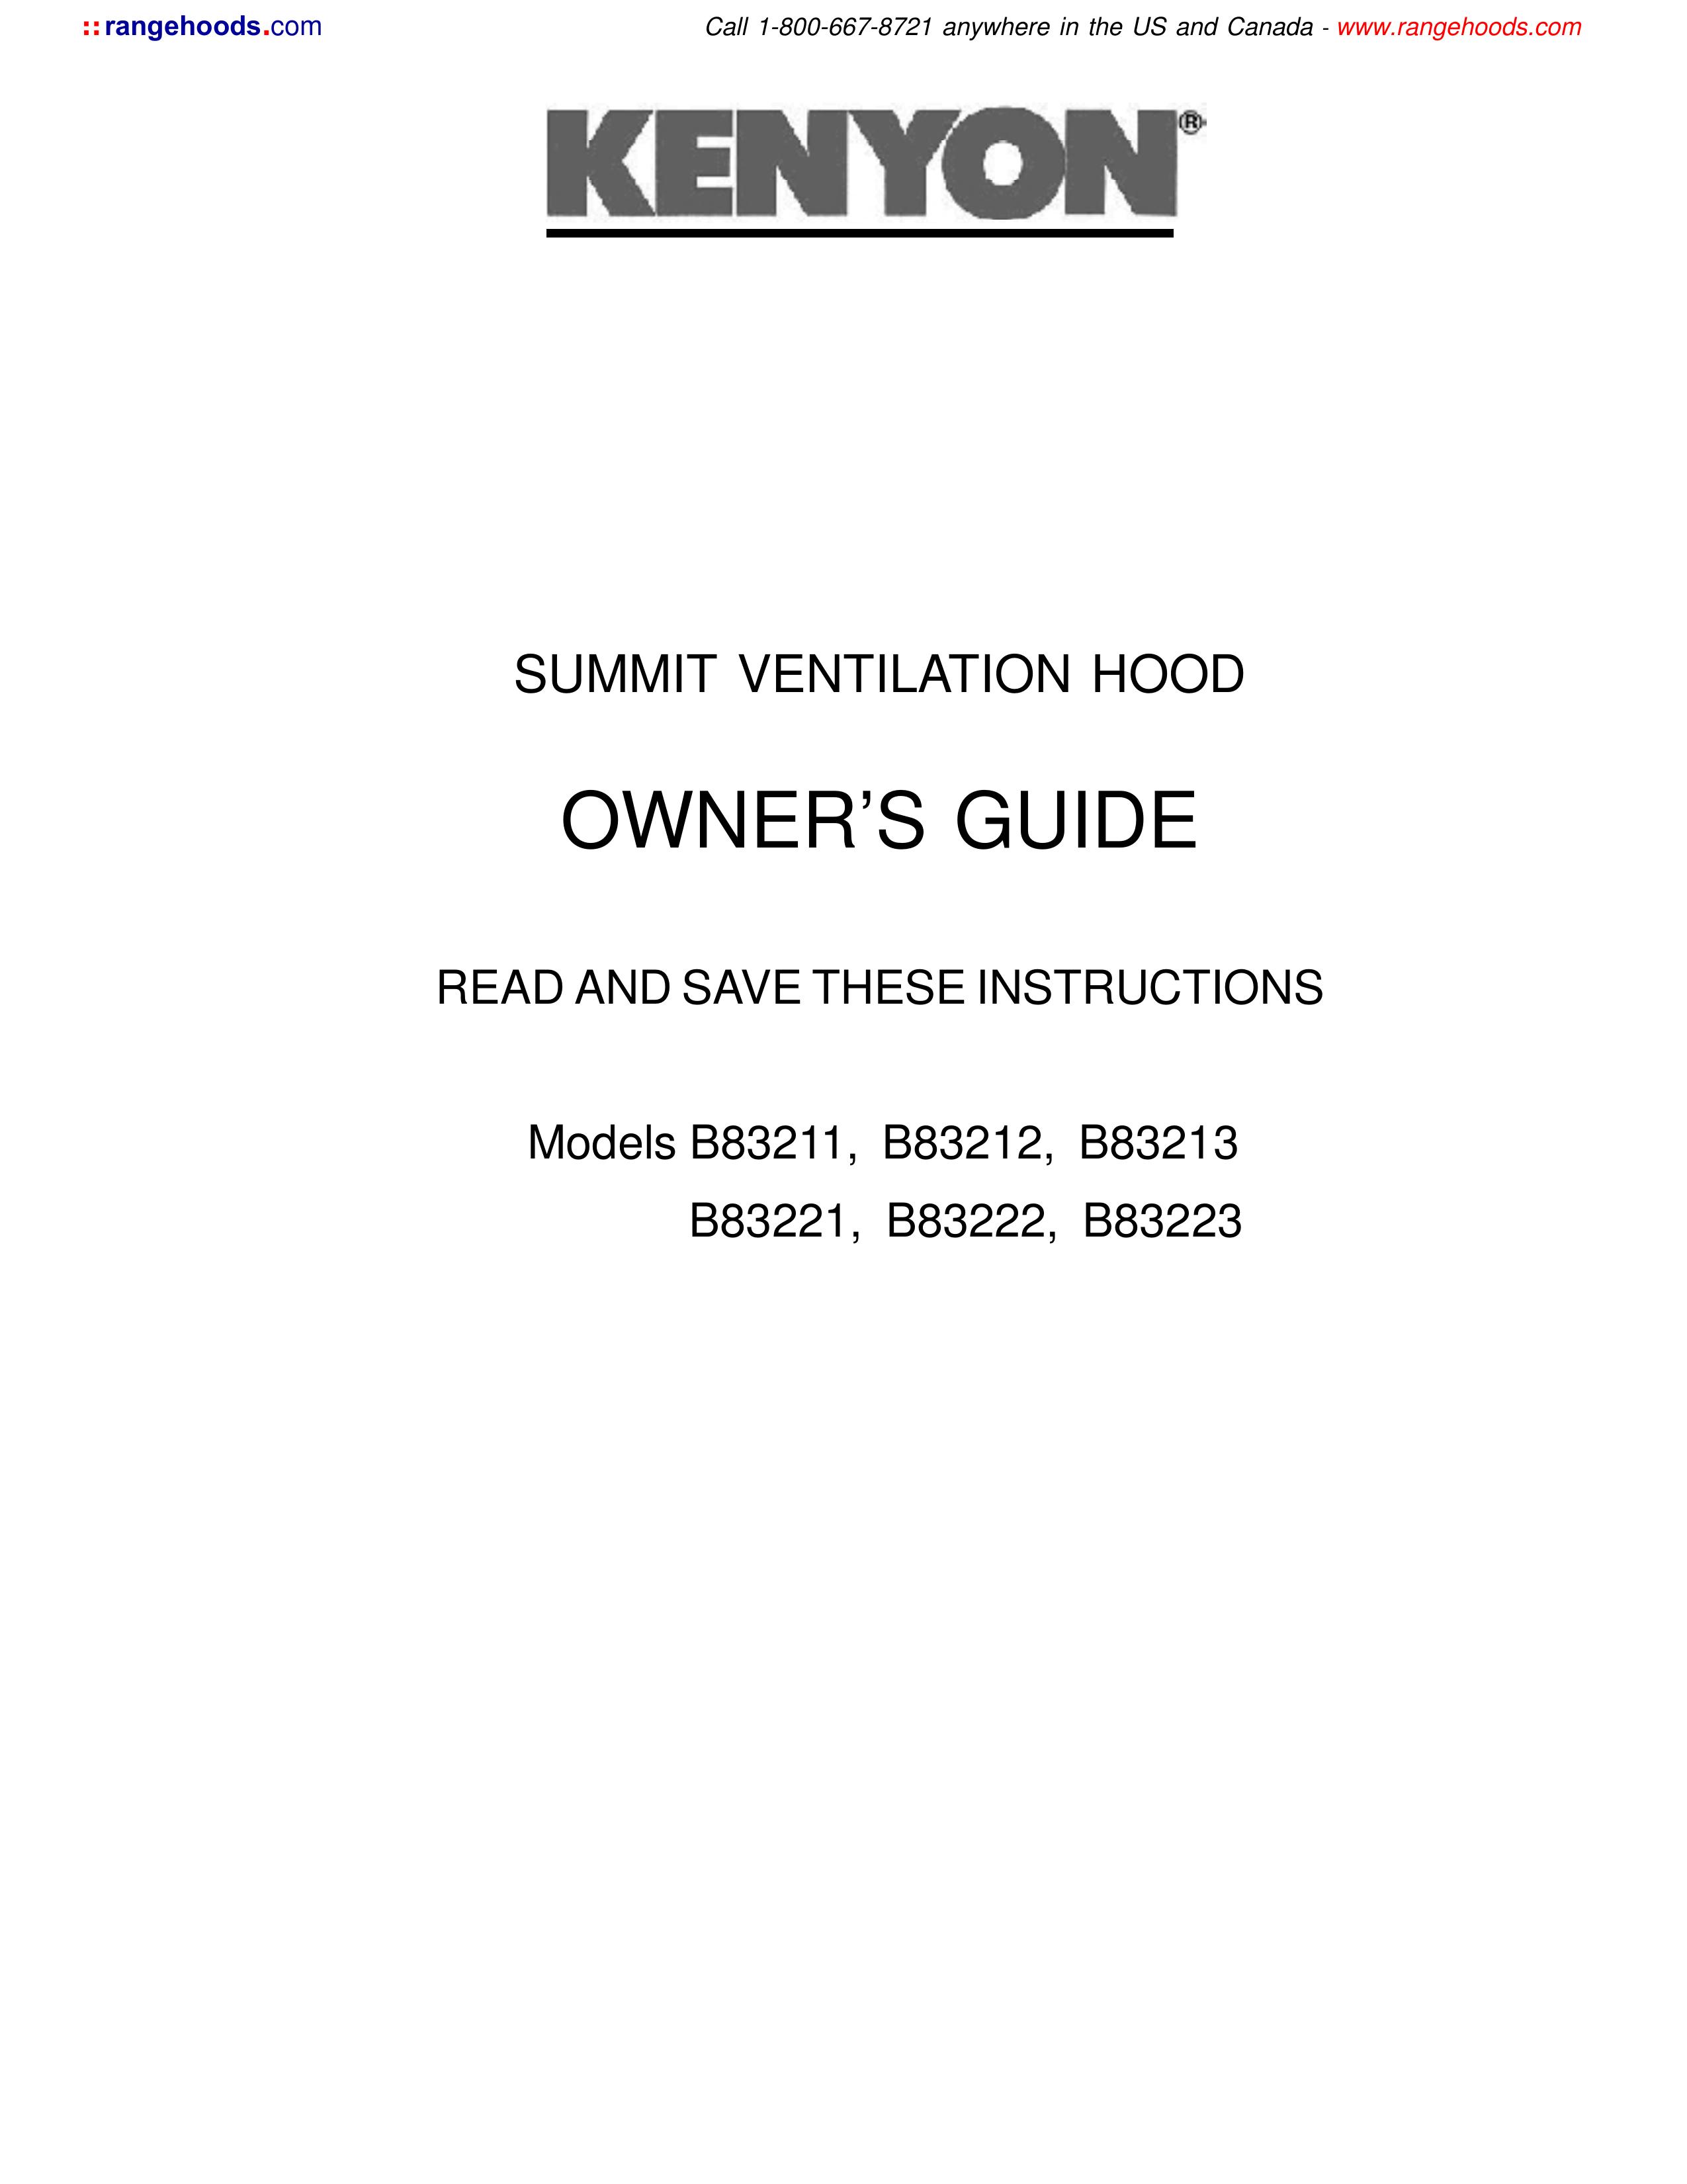 Kenyon B83212 Ventilation Hood User Manual